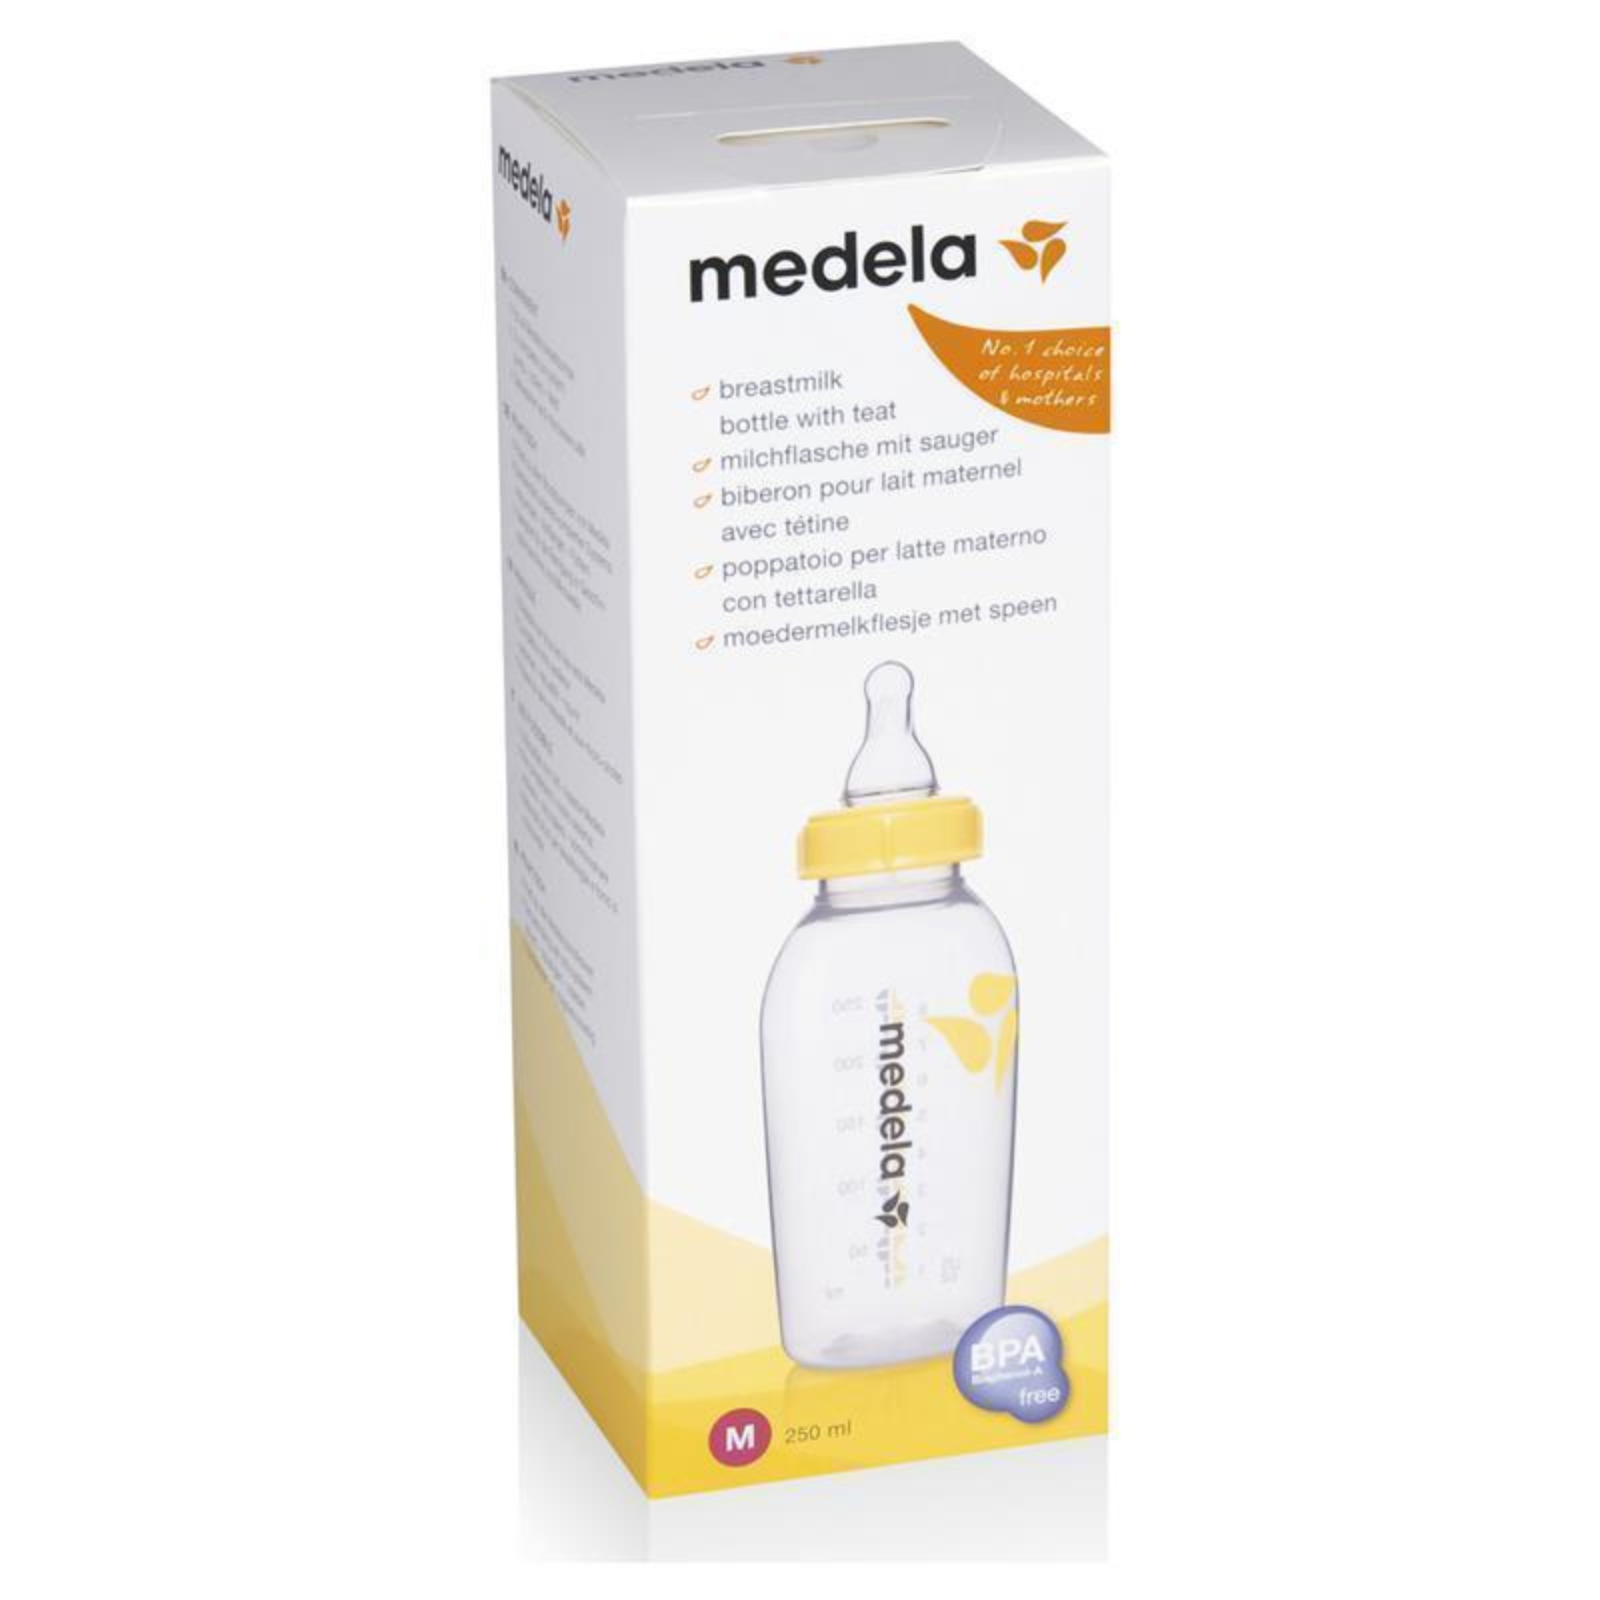 Medela Breastmilk Bottle with Teat 250ml - $79.72